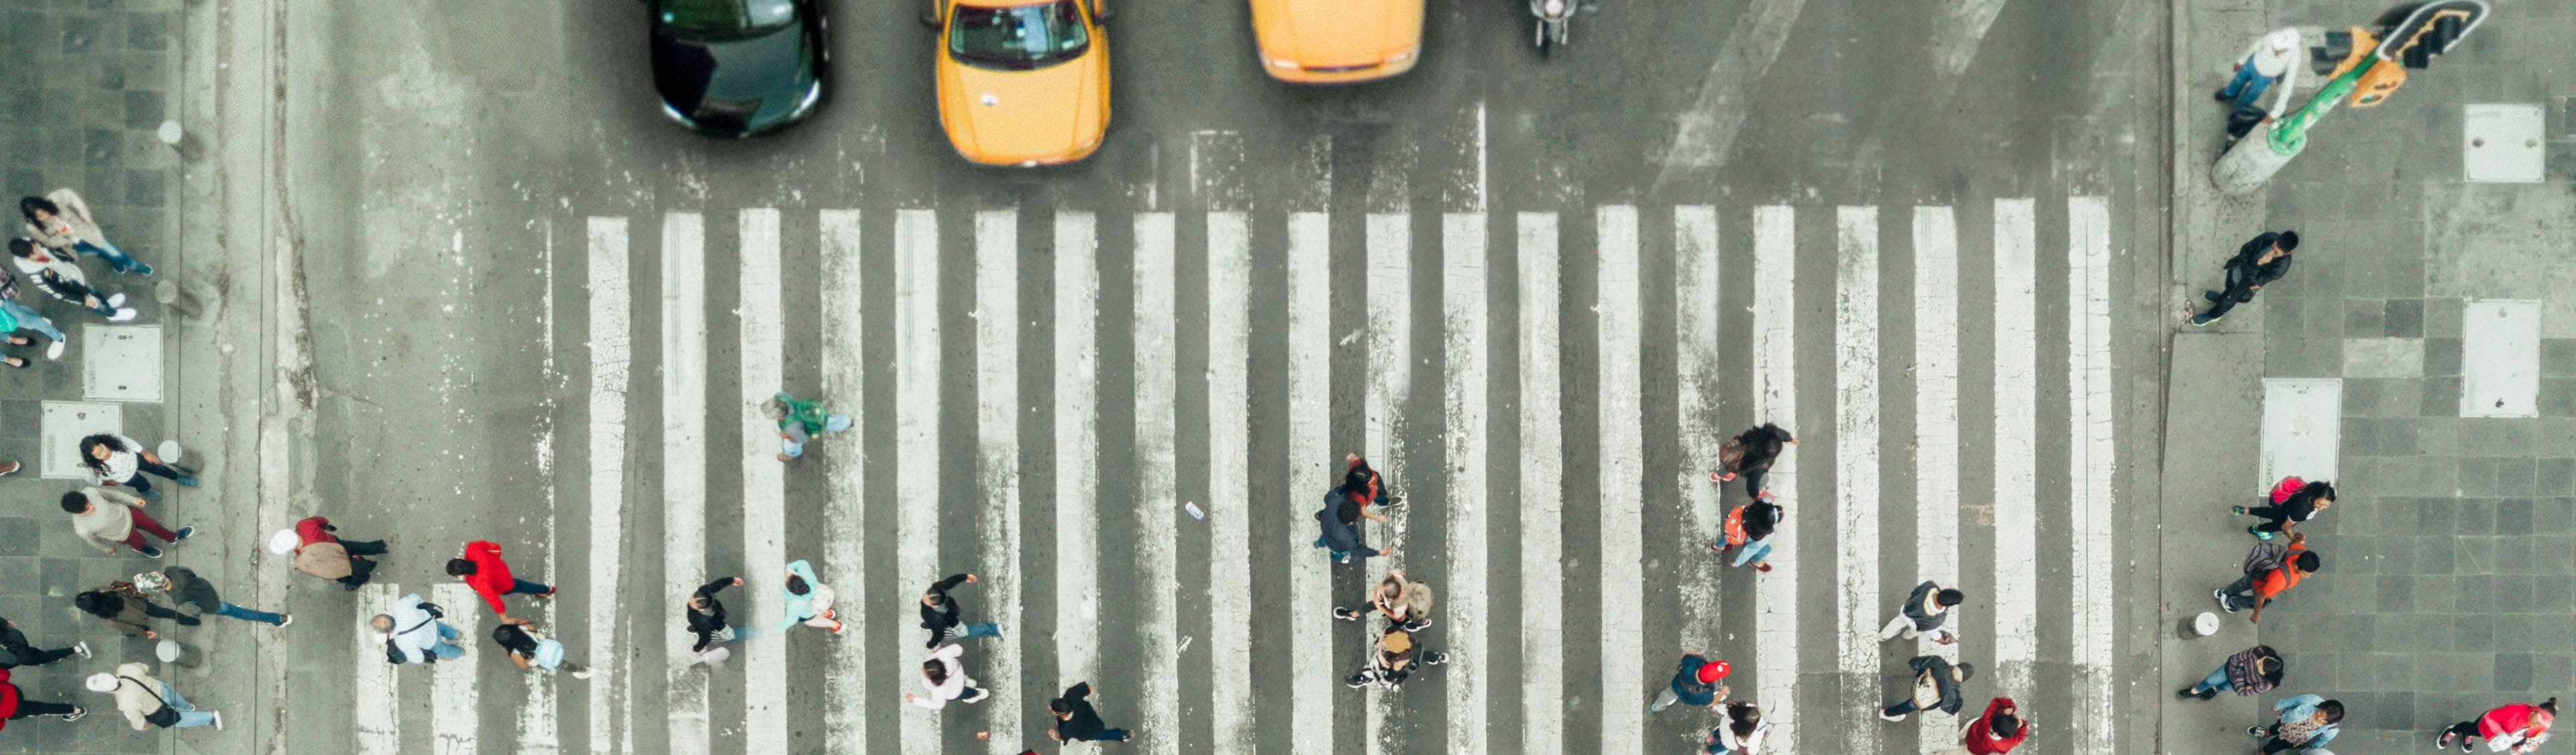 Aerial view of pedestrians on zebra crossing